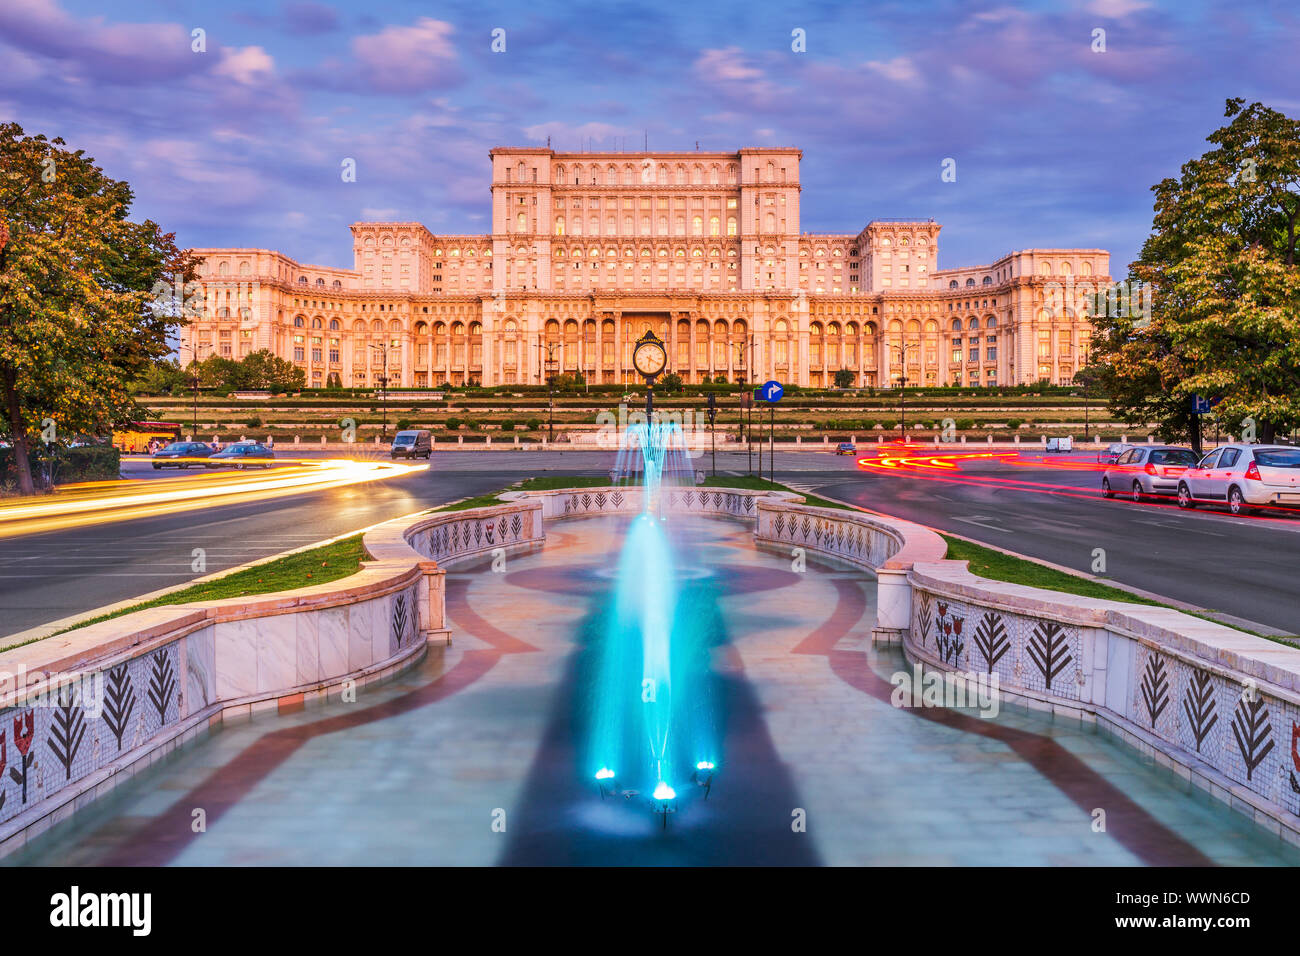 Bukarest, Rumänien. Der Palast des Parlaments bei Sonnenaufgang. Stockfoto